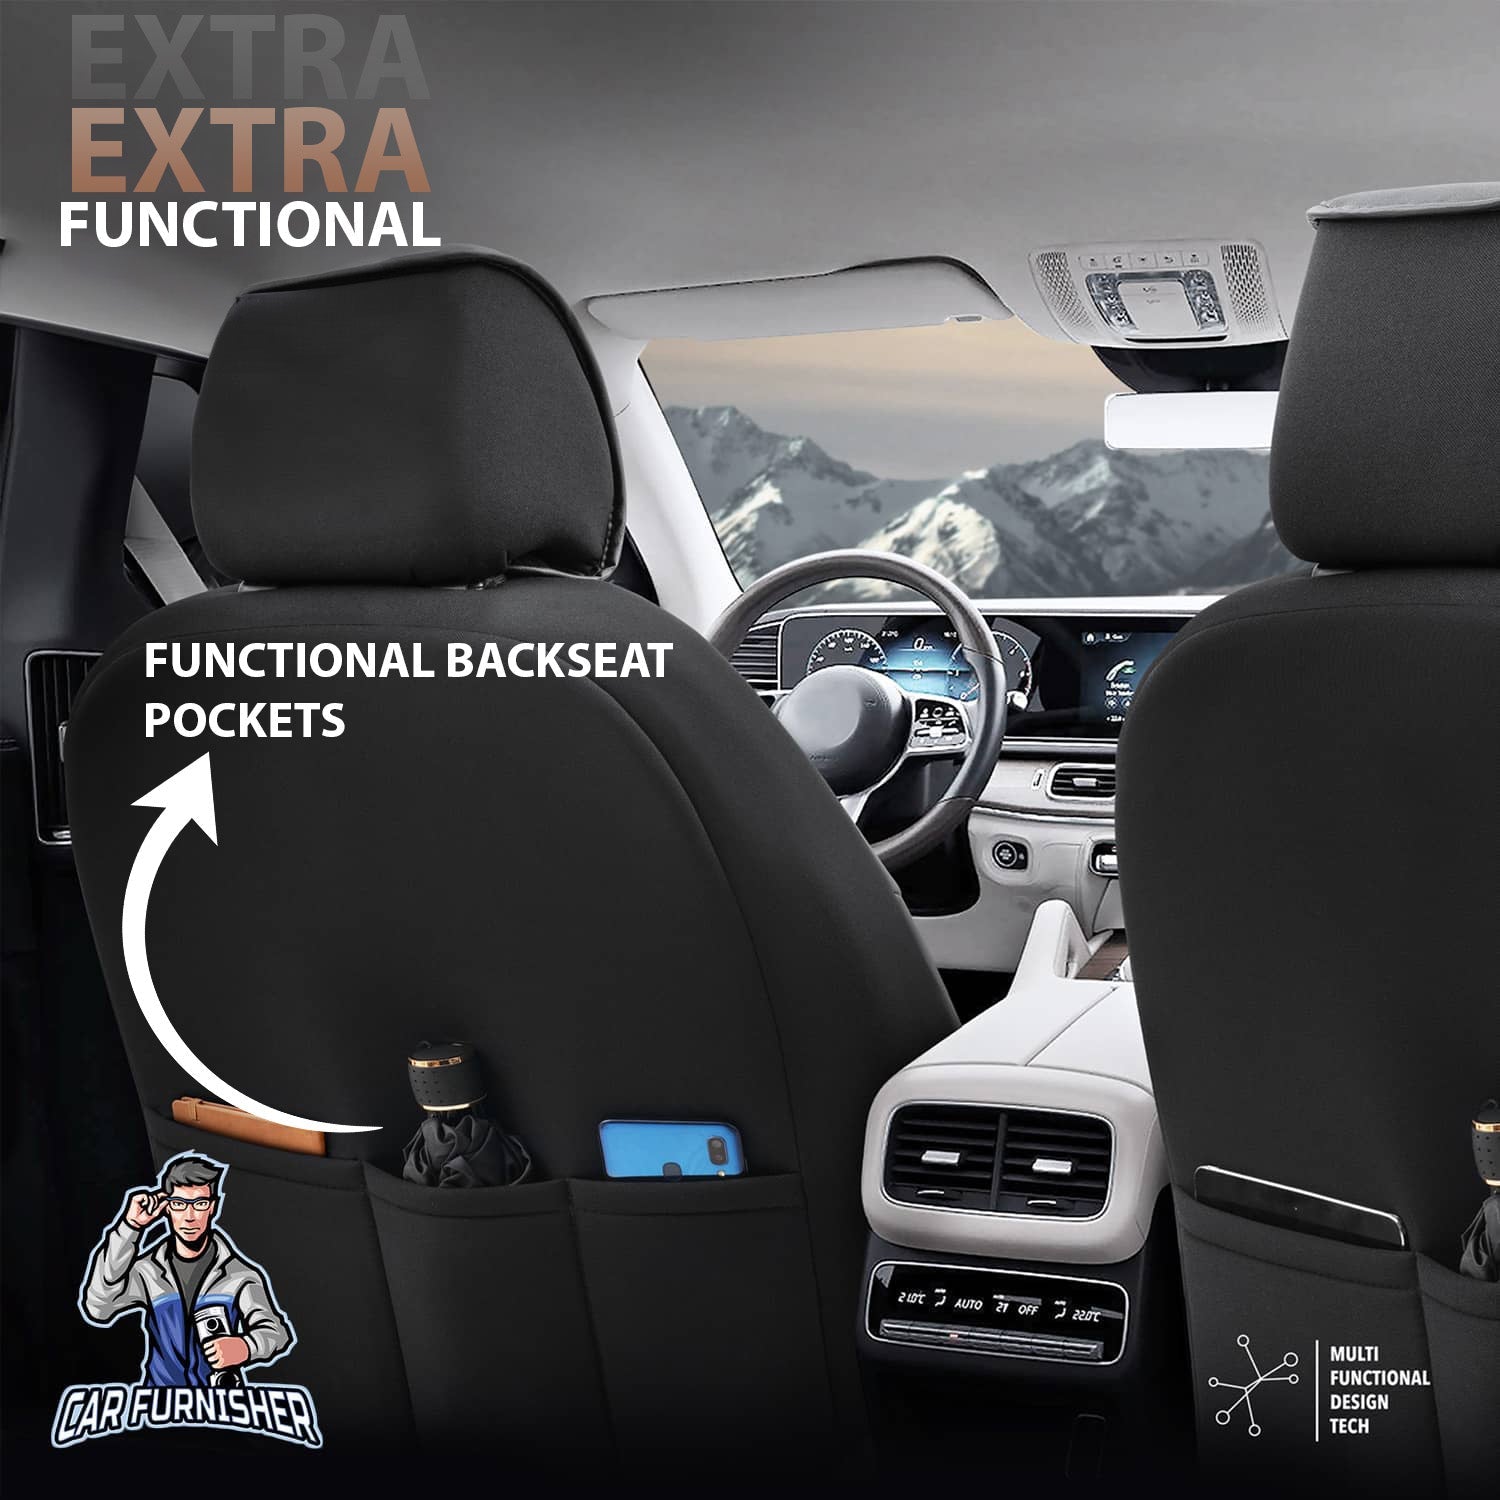 Volkswagen Jetta Seat Covers Advanced Design Orange 5 Seats + Headrests (Full Set) Leather & Linen Fabric